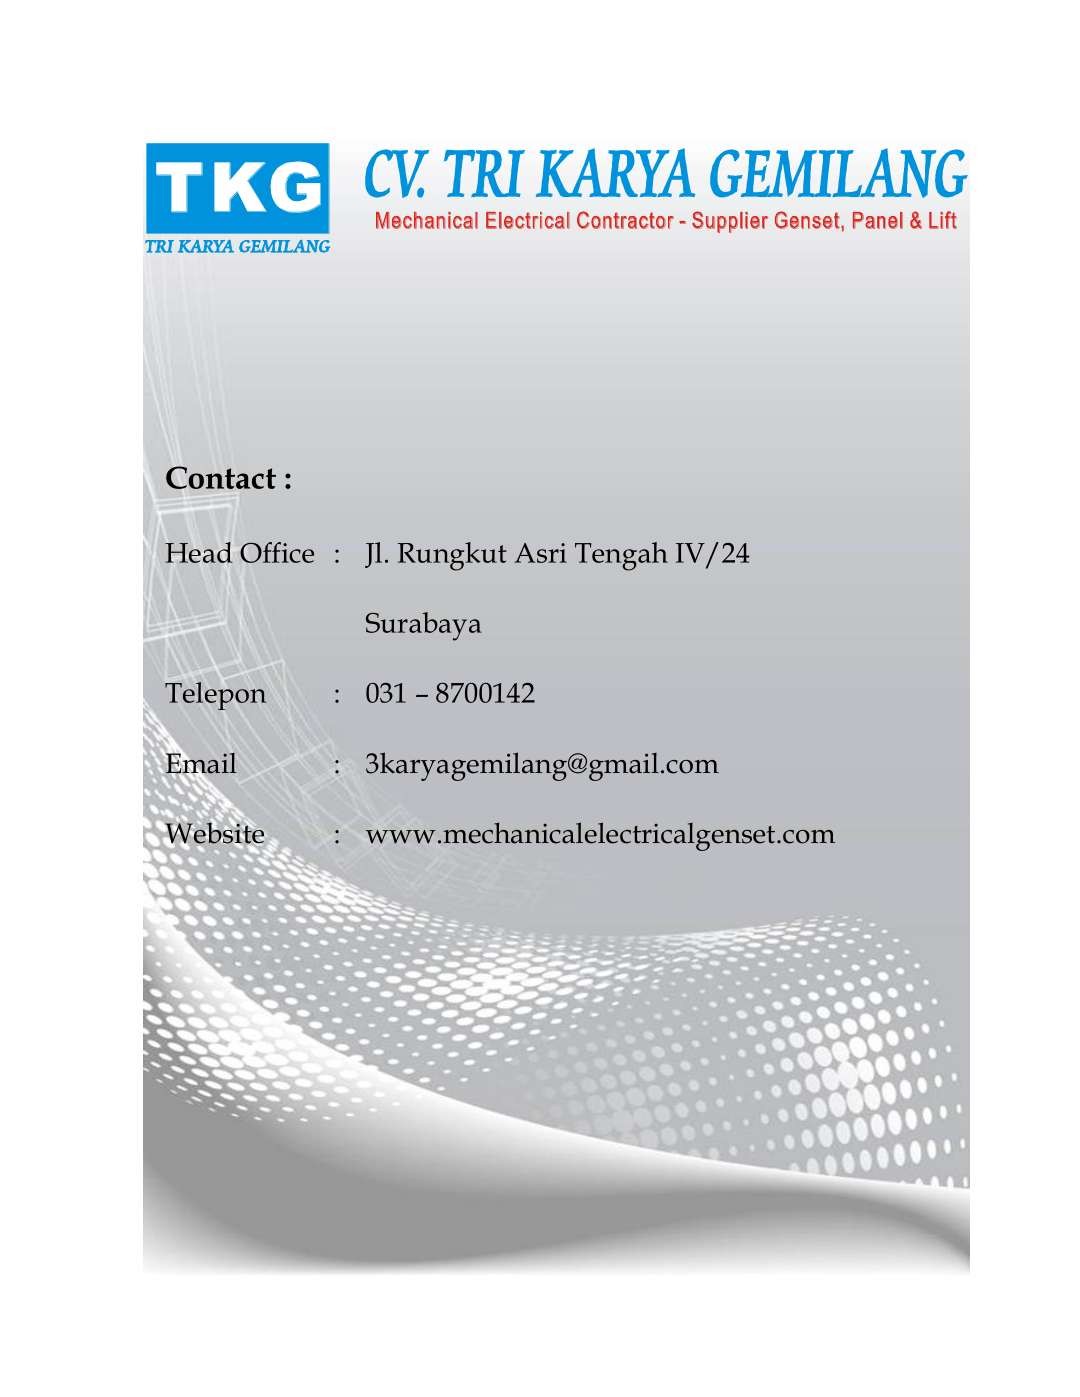 Kontraktor Mechanical,Elektrikal,Supplier Genset,Panel,Lift Surabaya | CV TRI KARYA GEMILANG